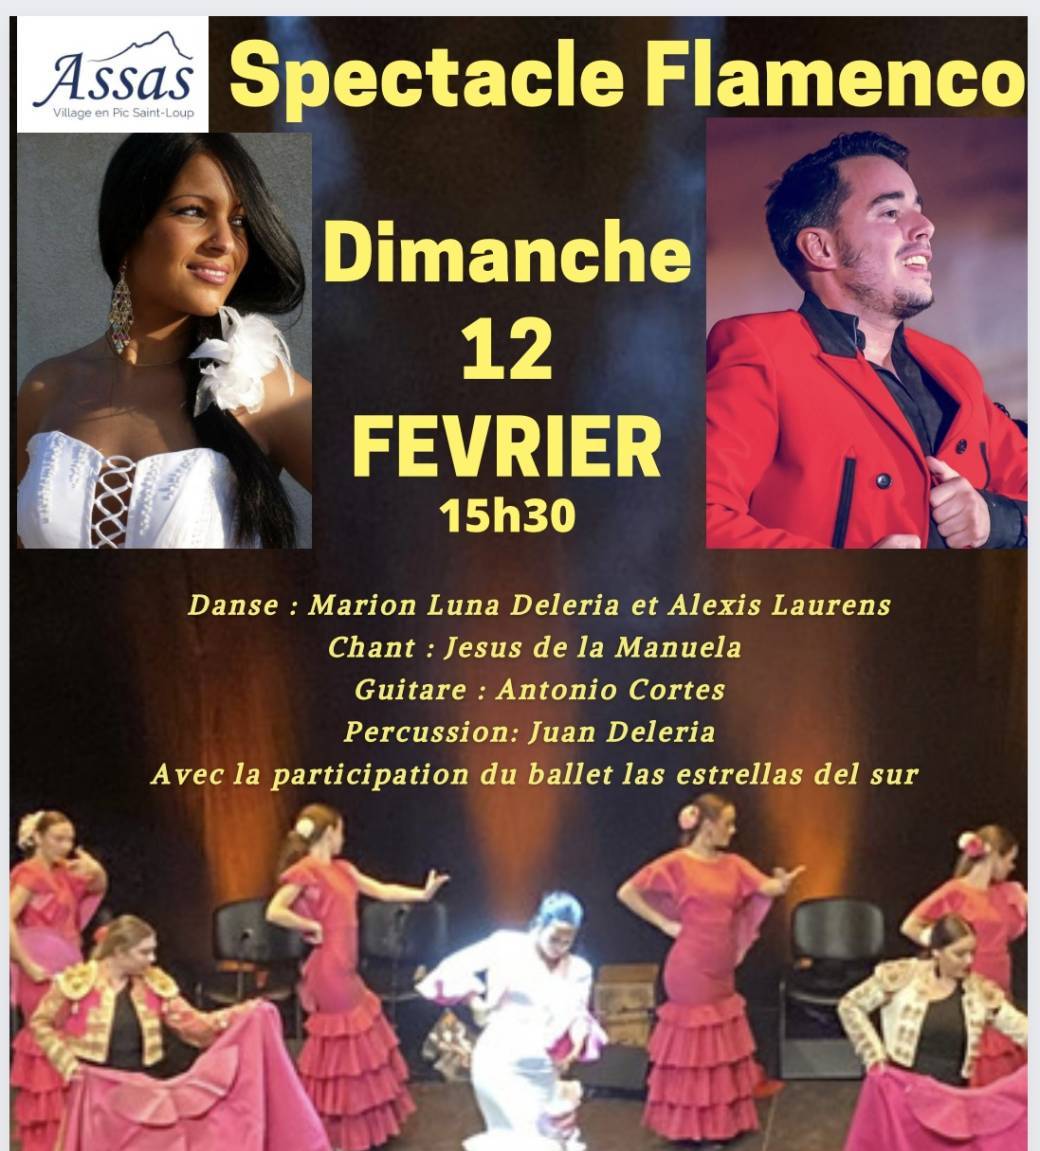 Spectacle Flamenco Assas